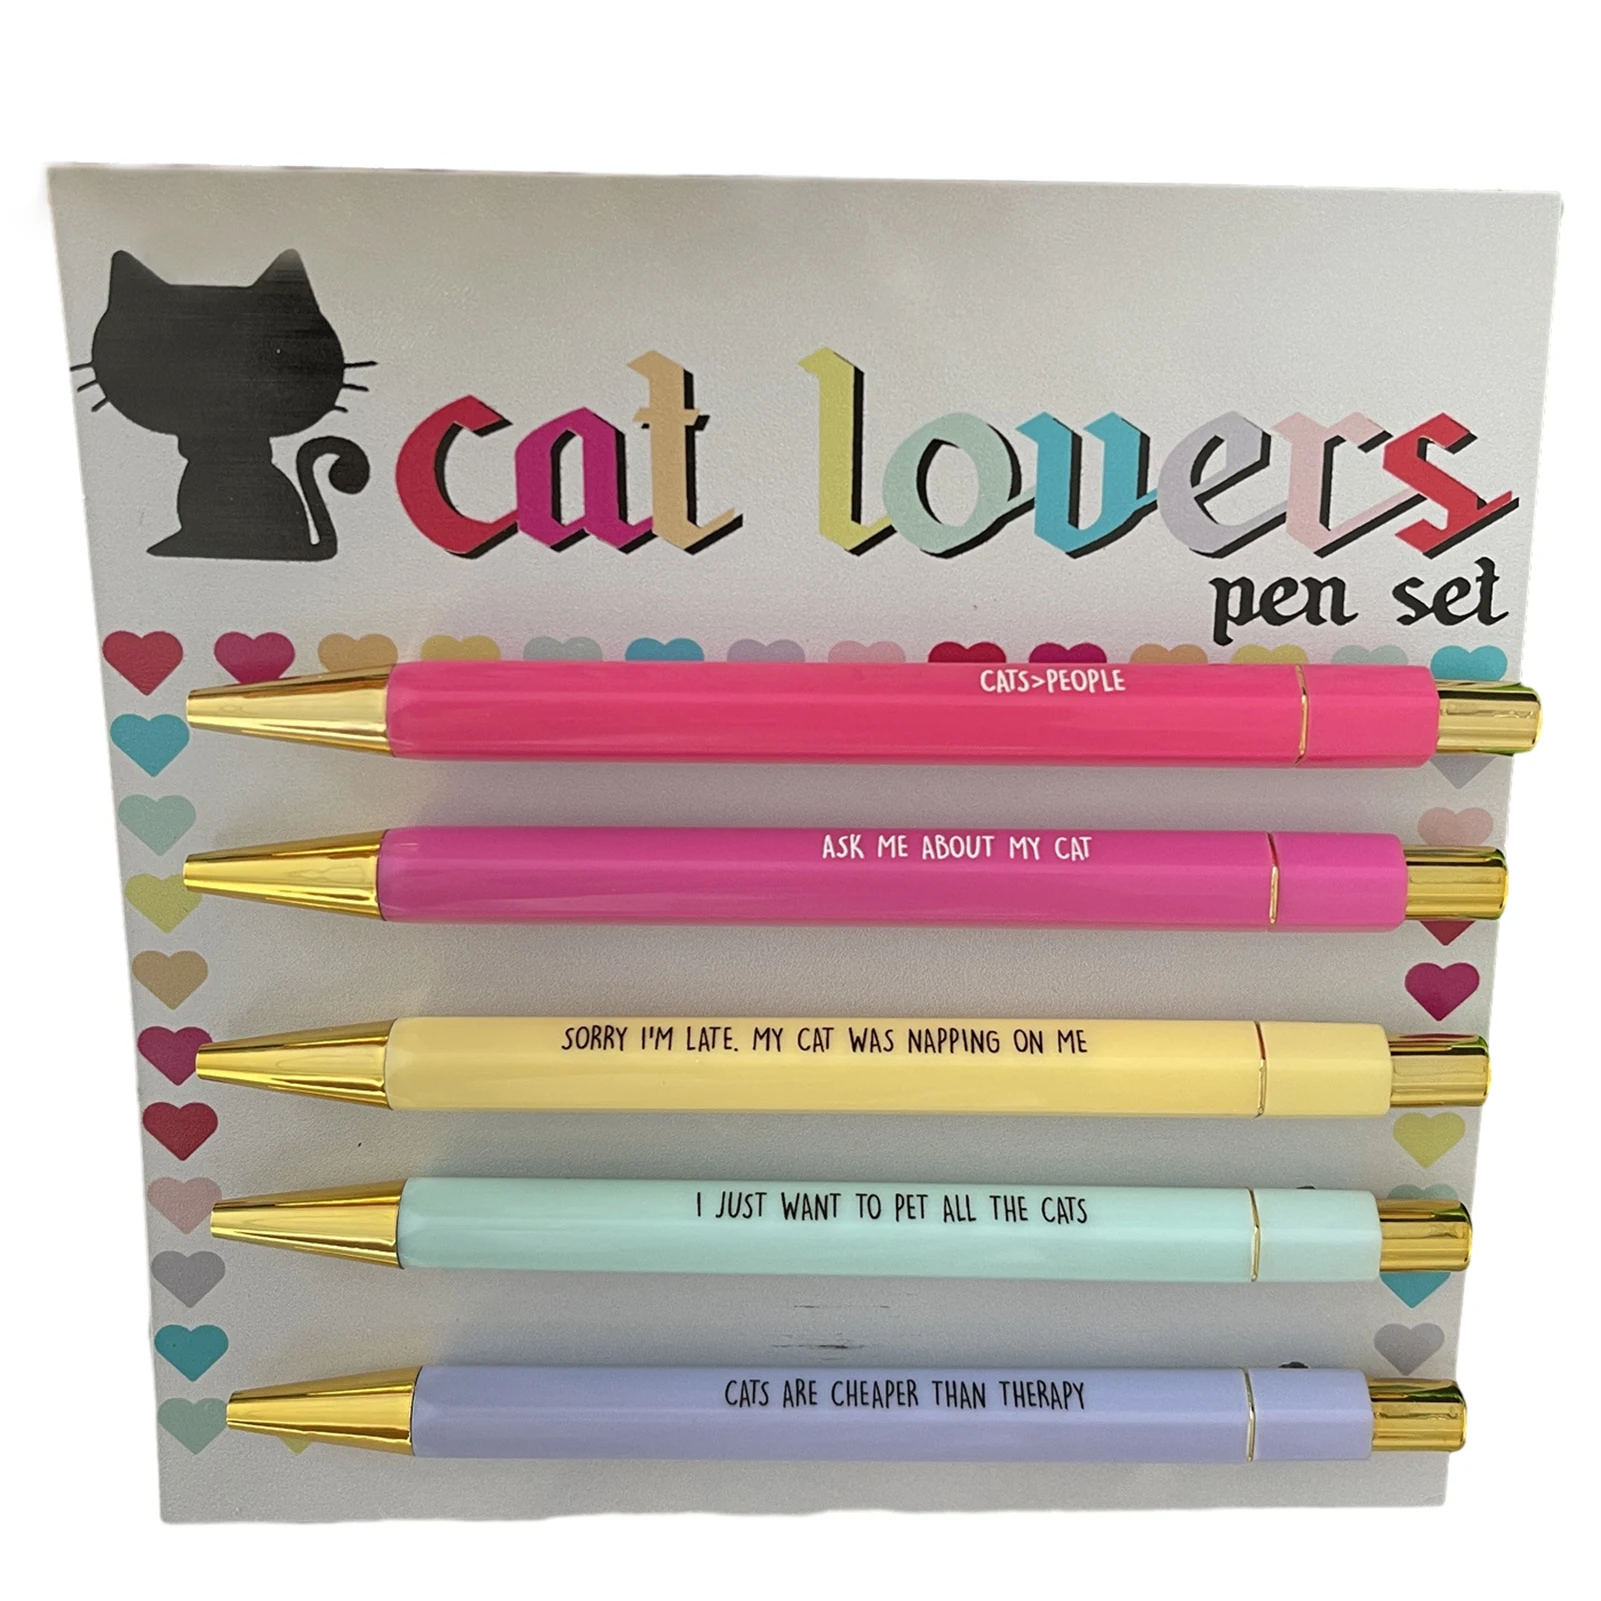 https://ae01.alicdn.com/kf/S3d000515ae0340dbaa6176ec9ad1aa22x/Funny-Dog-Cat-People-Pens-Themed-Nurses-Pens-Set-Portable-Soomthly-Ink-Pens-Gift-For-Christmas.jpg